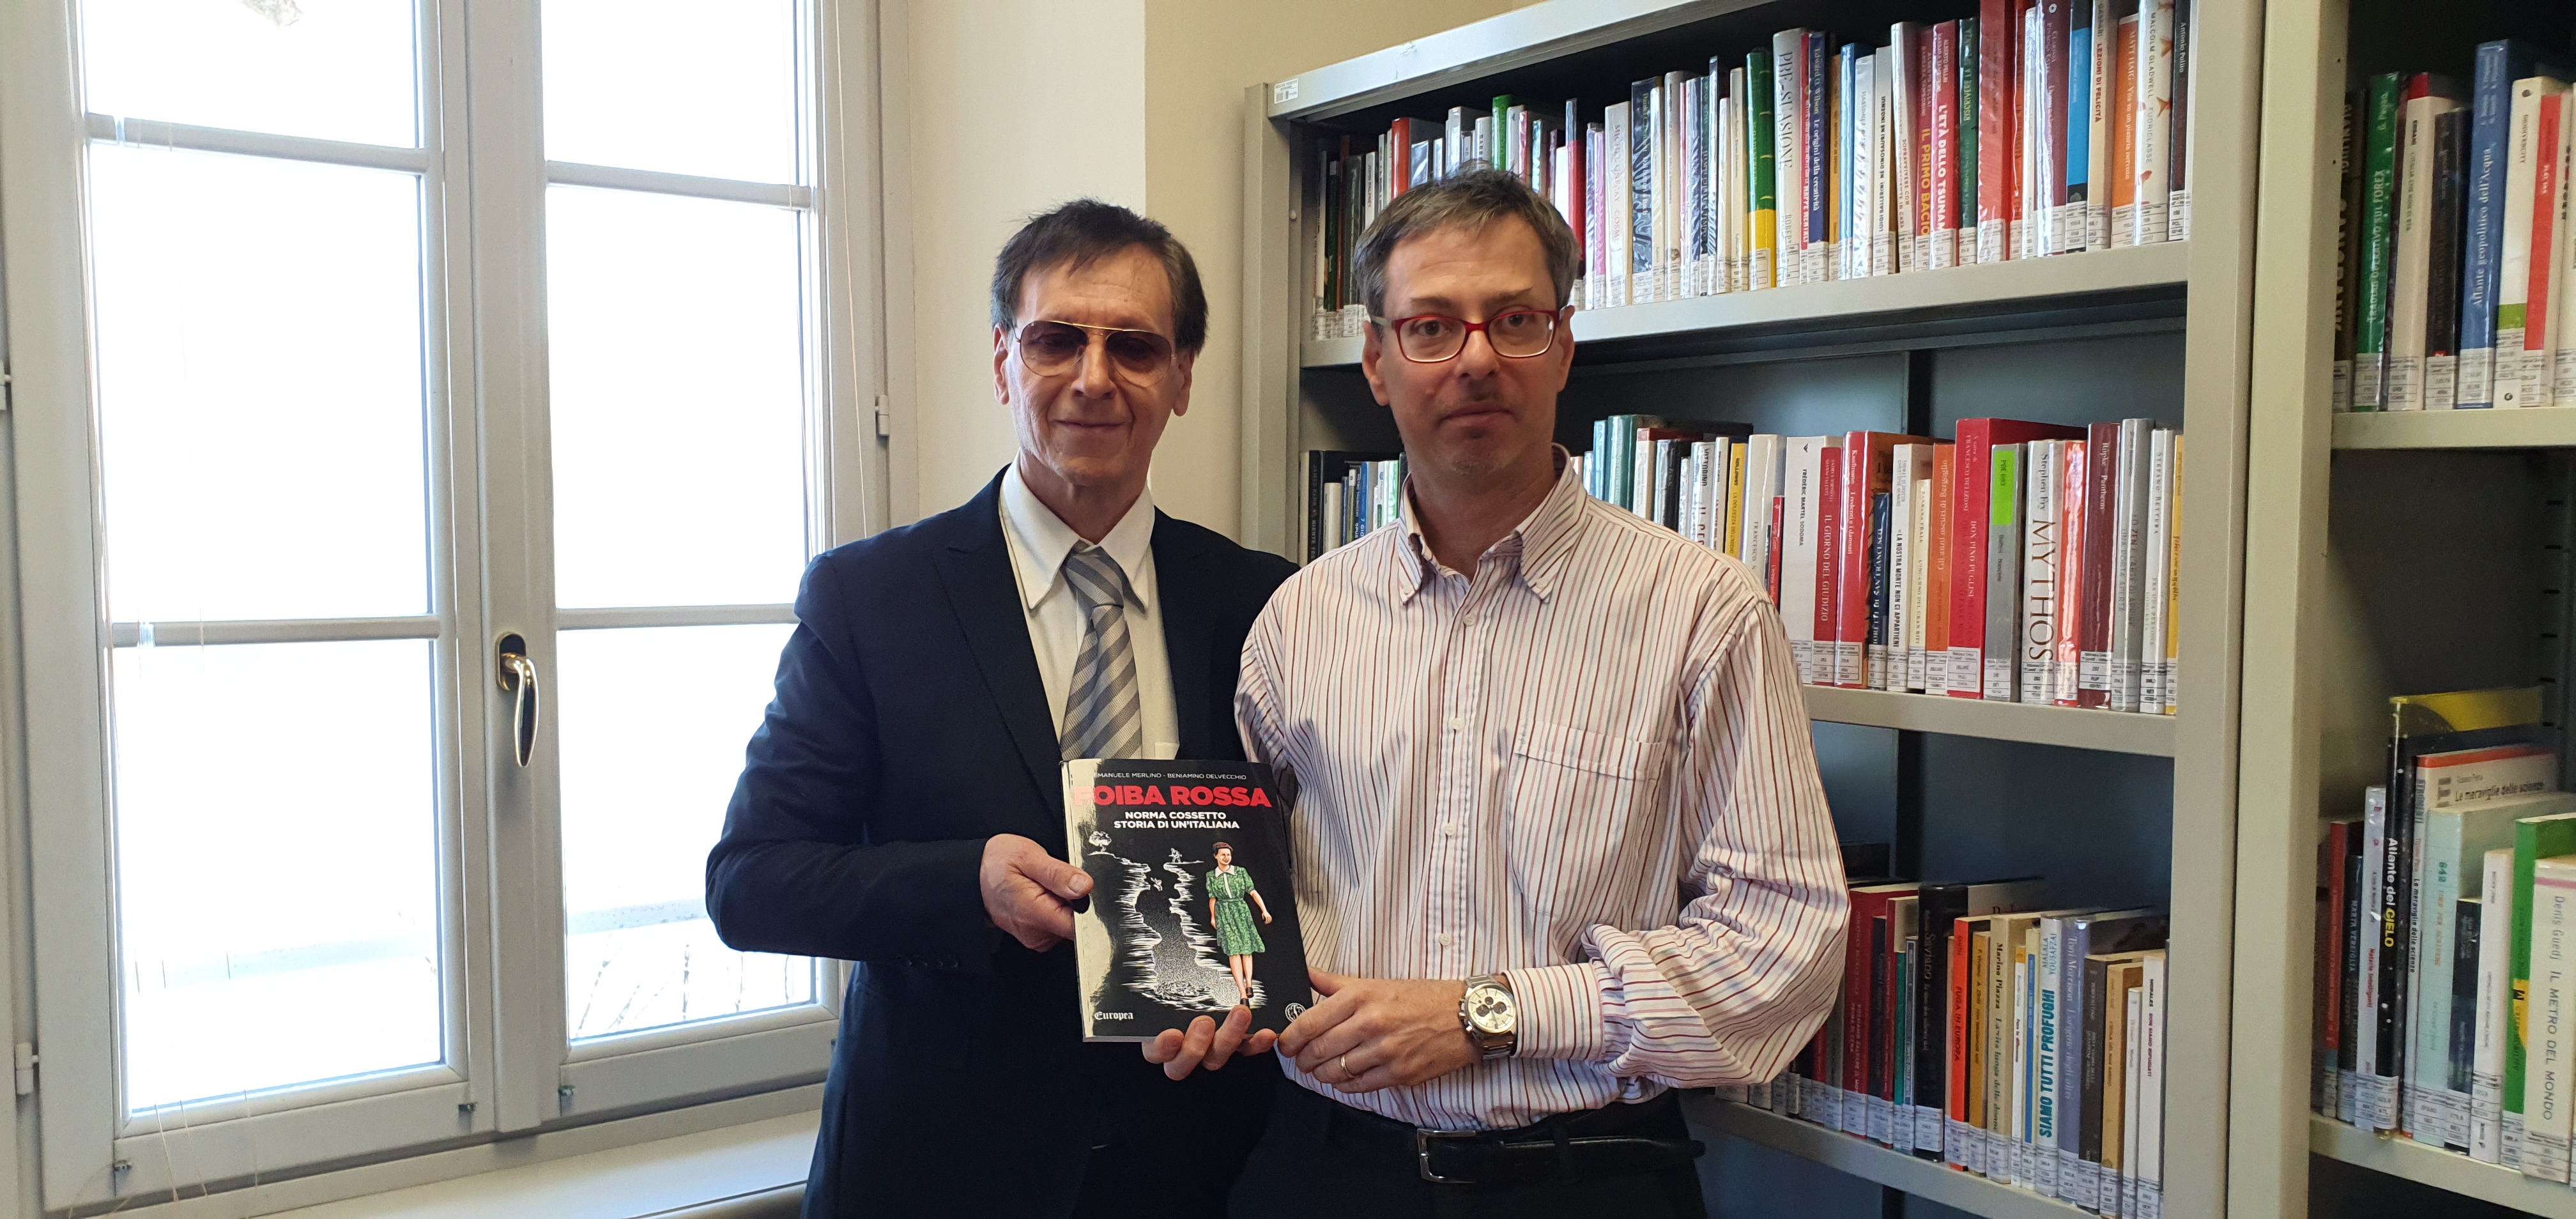 Verbania, Francesco Sirtori dona il libro "Foiba Rossa"